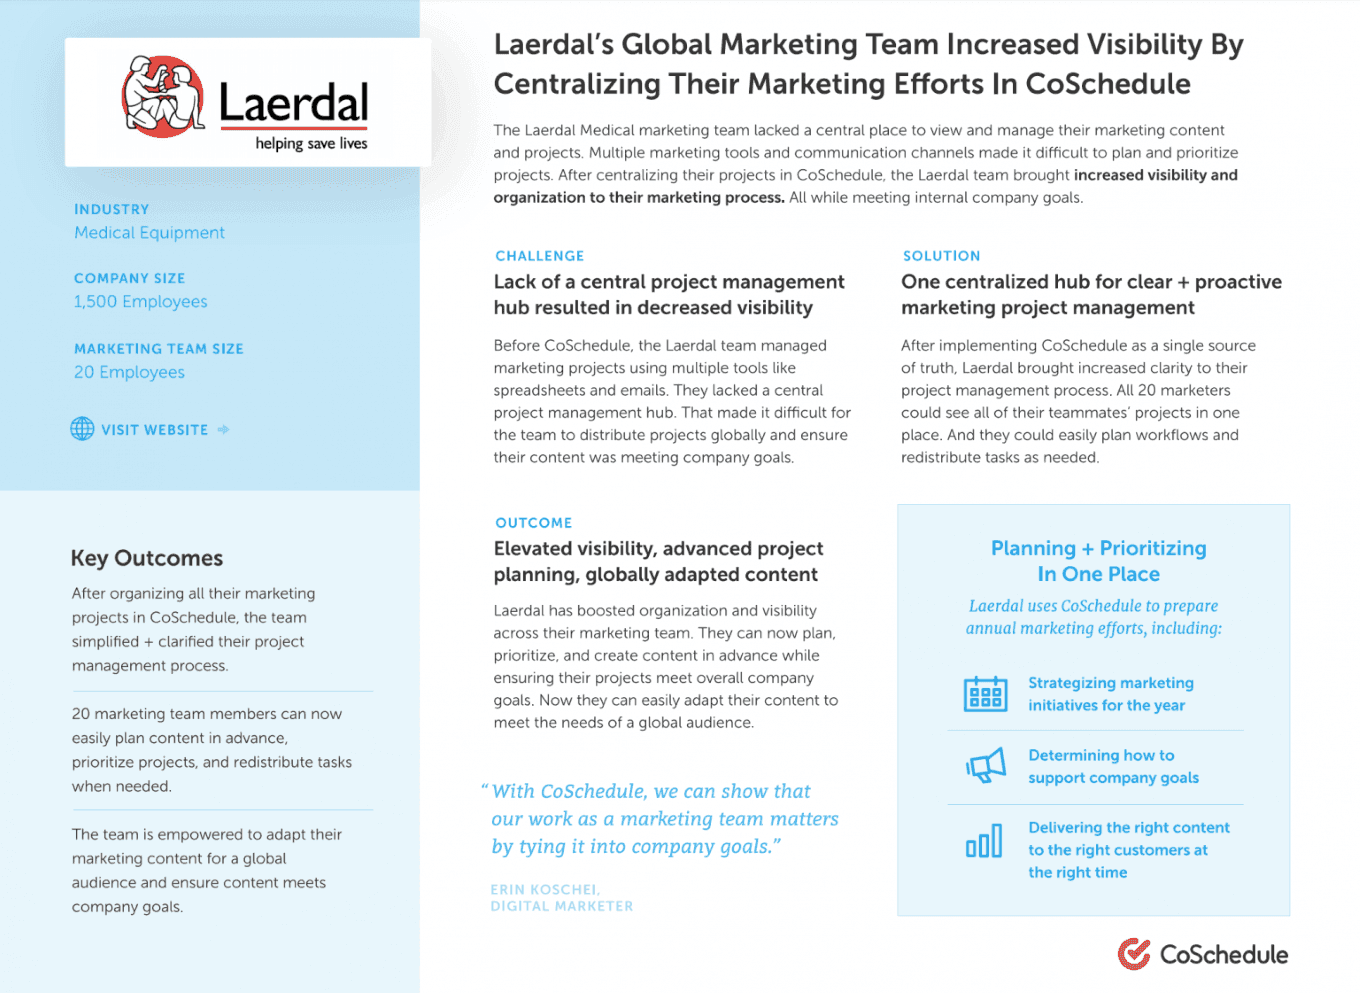 Laerdal's global marketing team case study